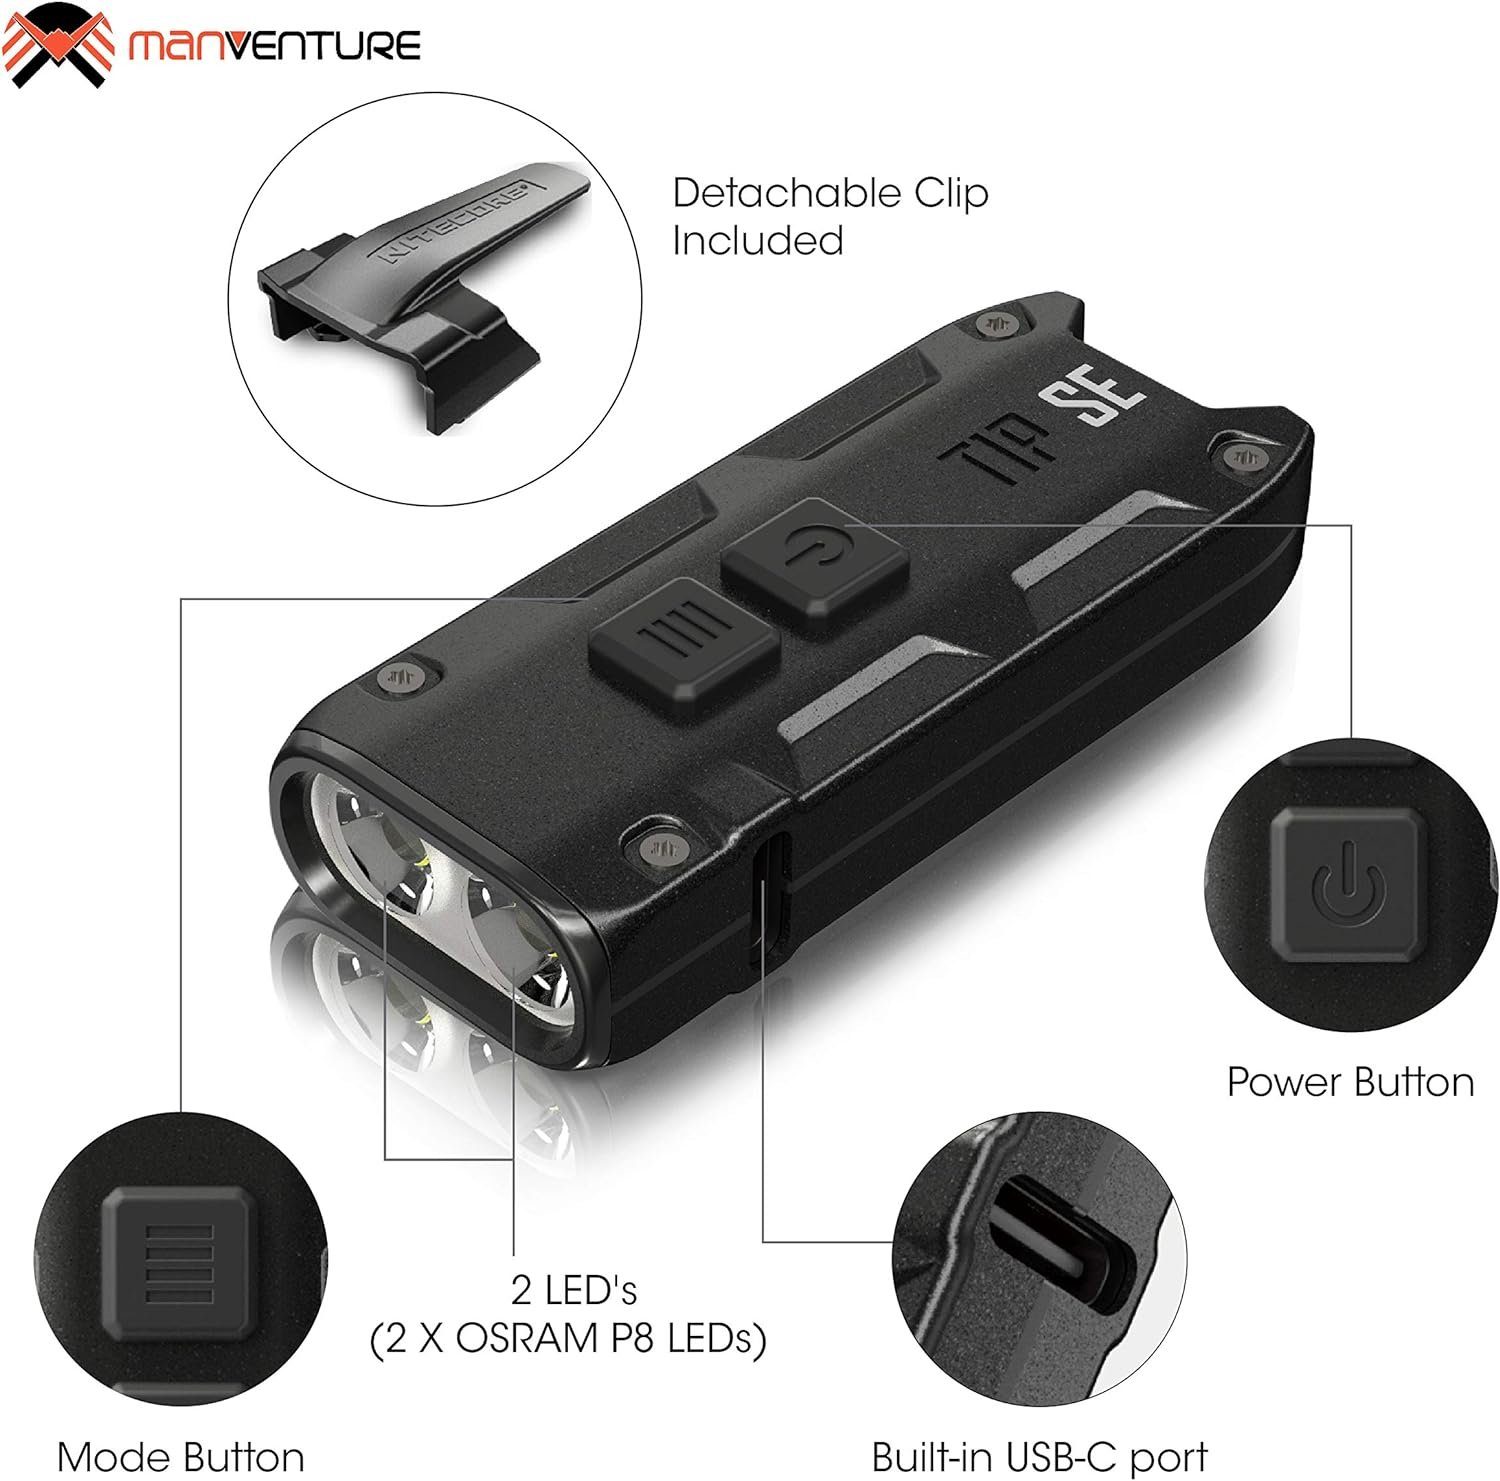 Nitecore LED Taschenlampe Tip Mini-Taschenlampe – (1-St) C Lumen - SE – 700 – LED USB Schlüsselanhänger